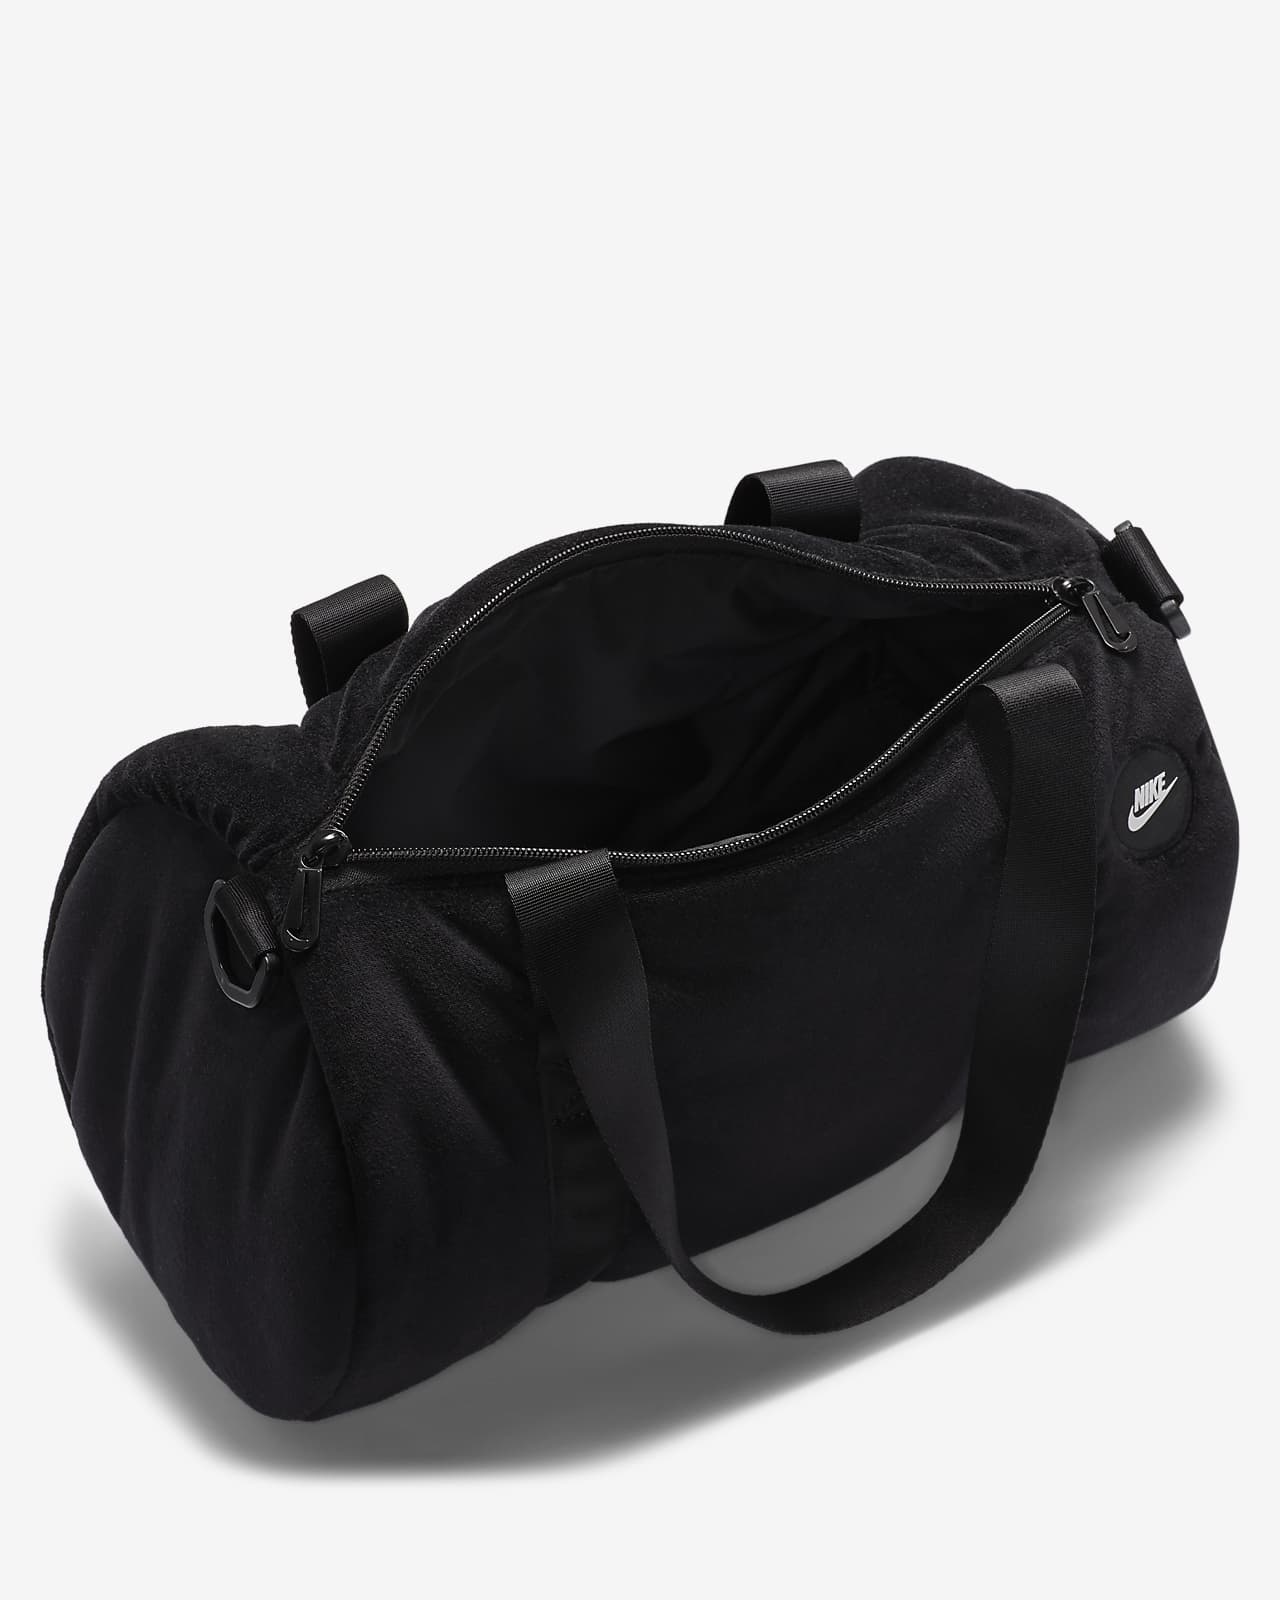 Scuba-diving travel bag 90L with rigid shell and wheels - black/blue -  Decathlon